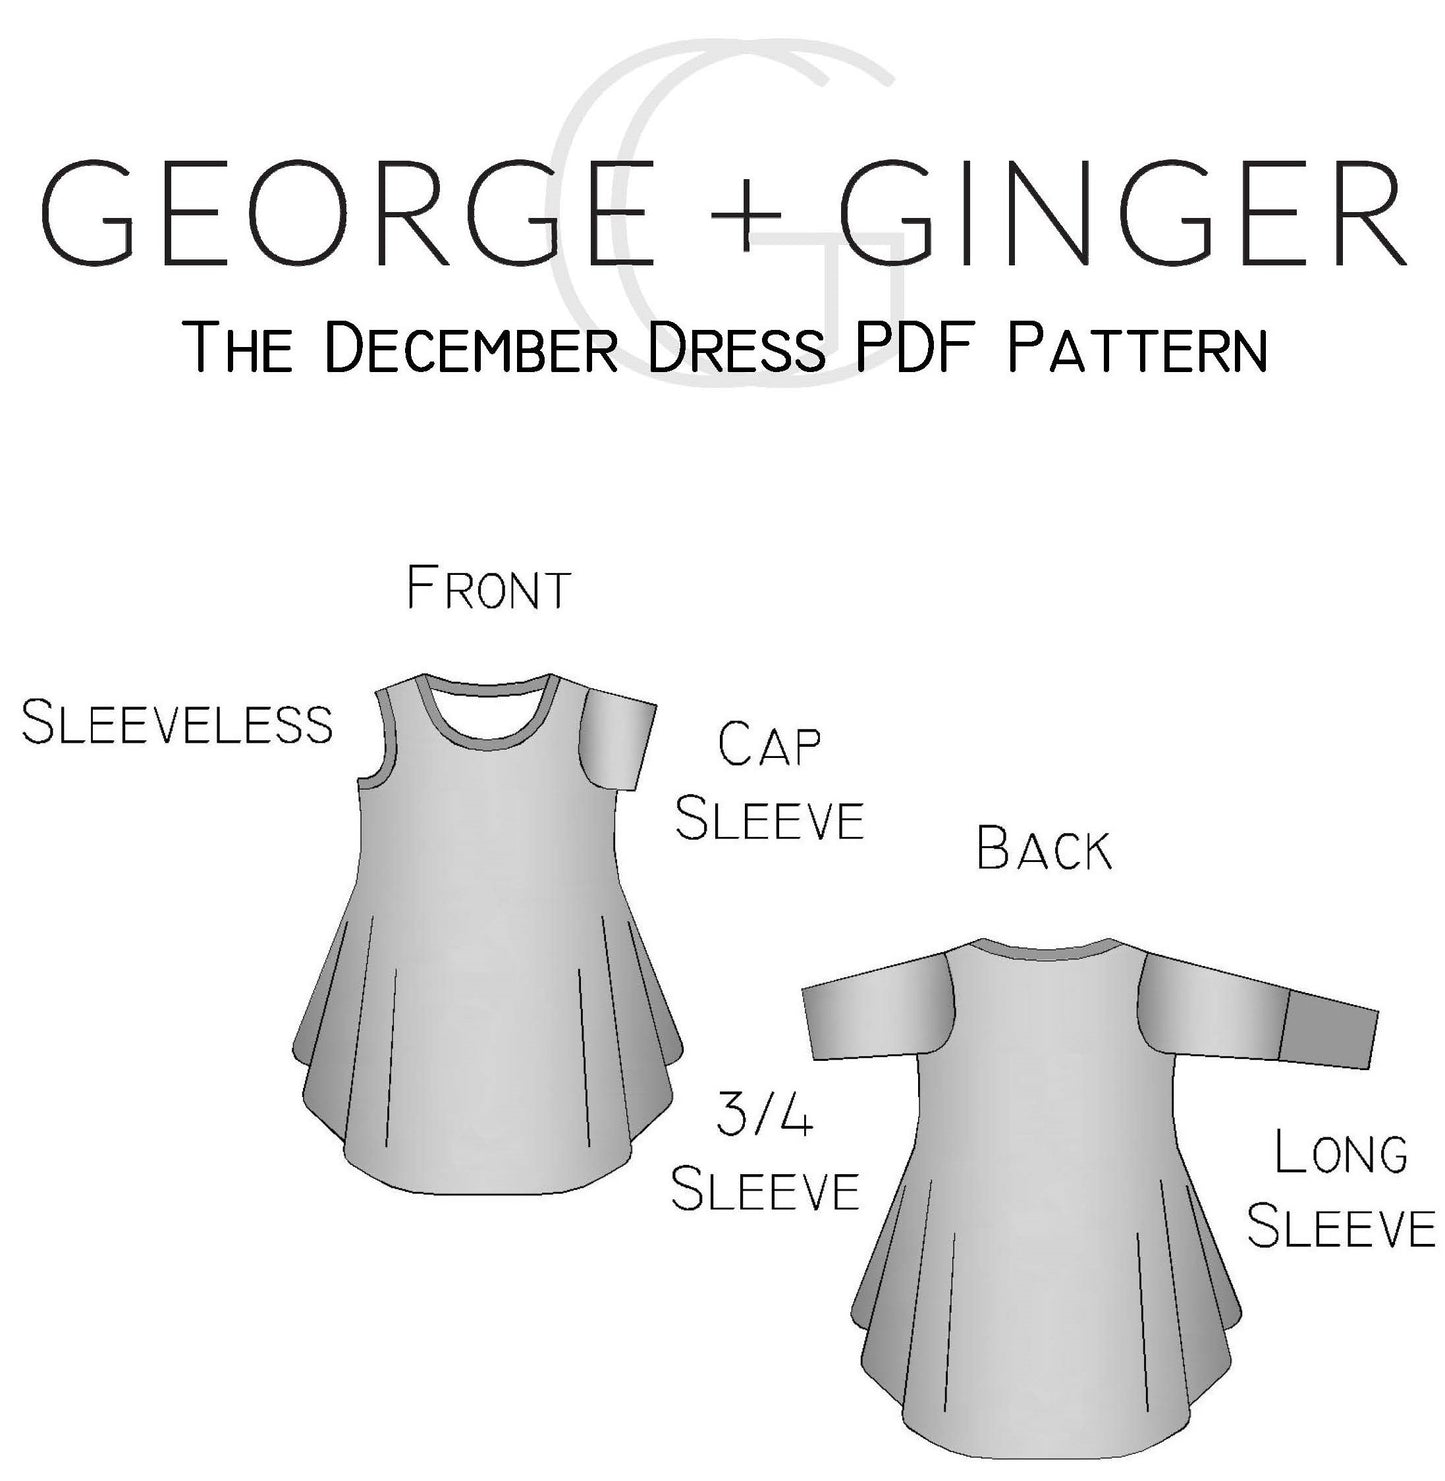 The December Dress PDF Sewing Pattern